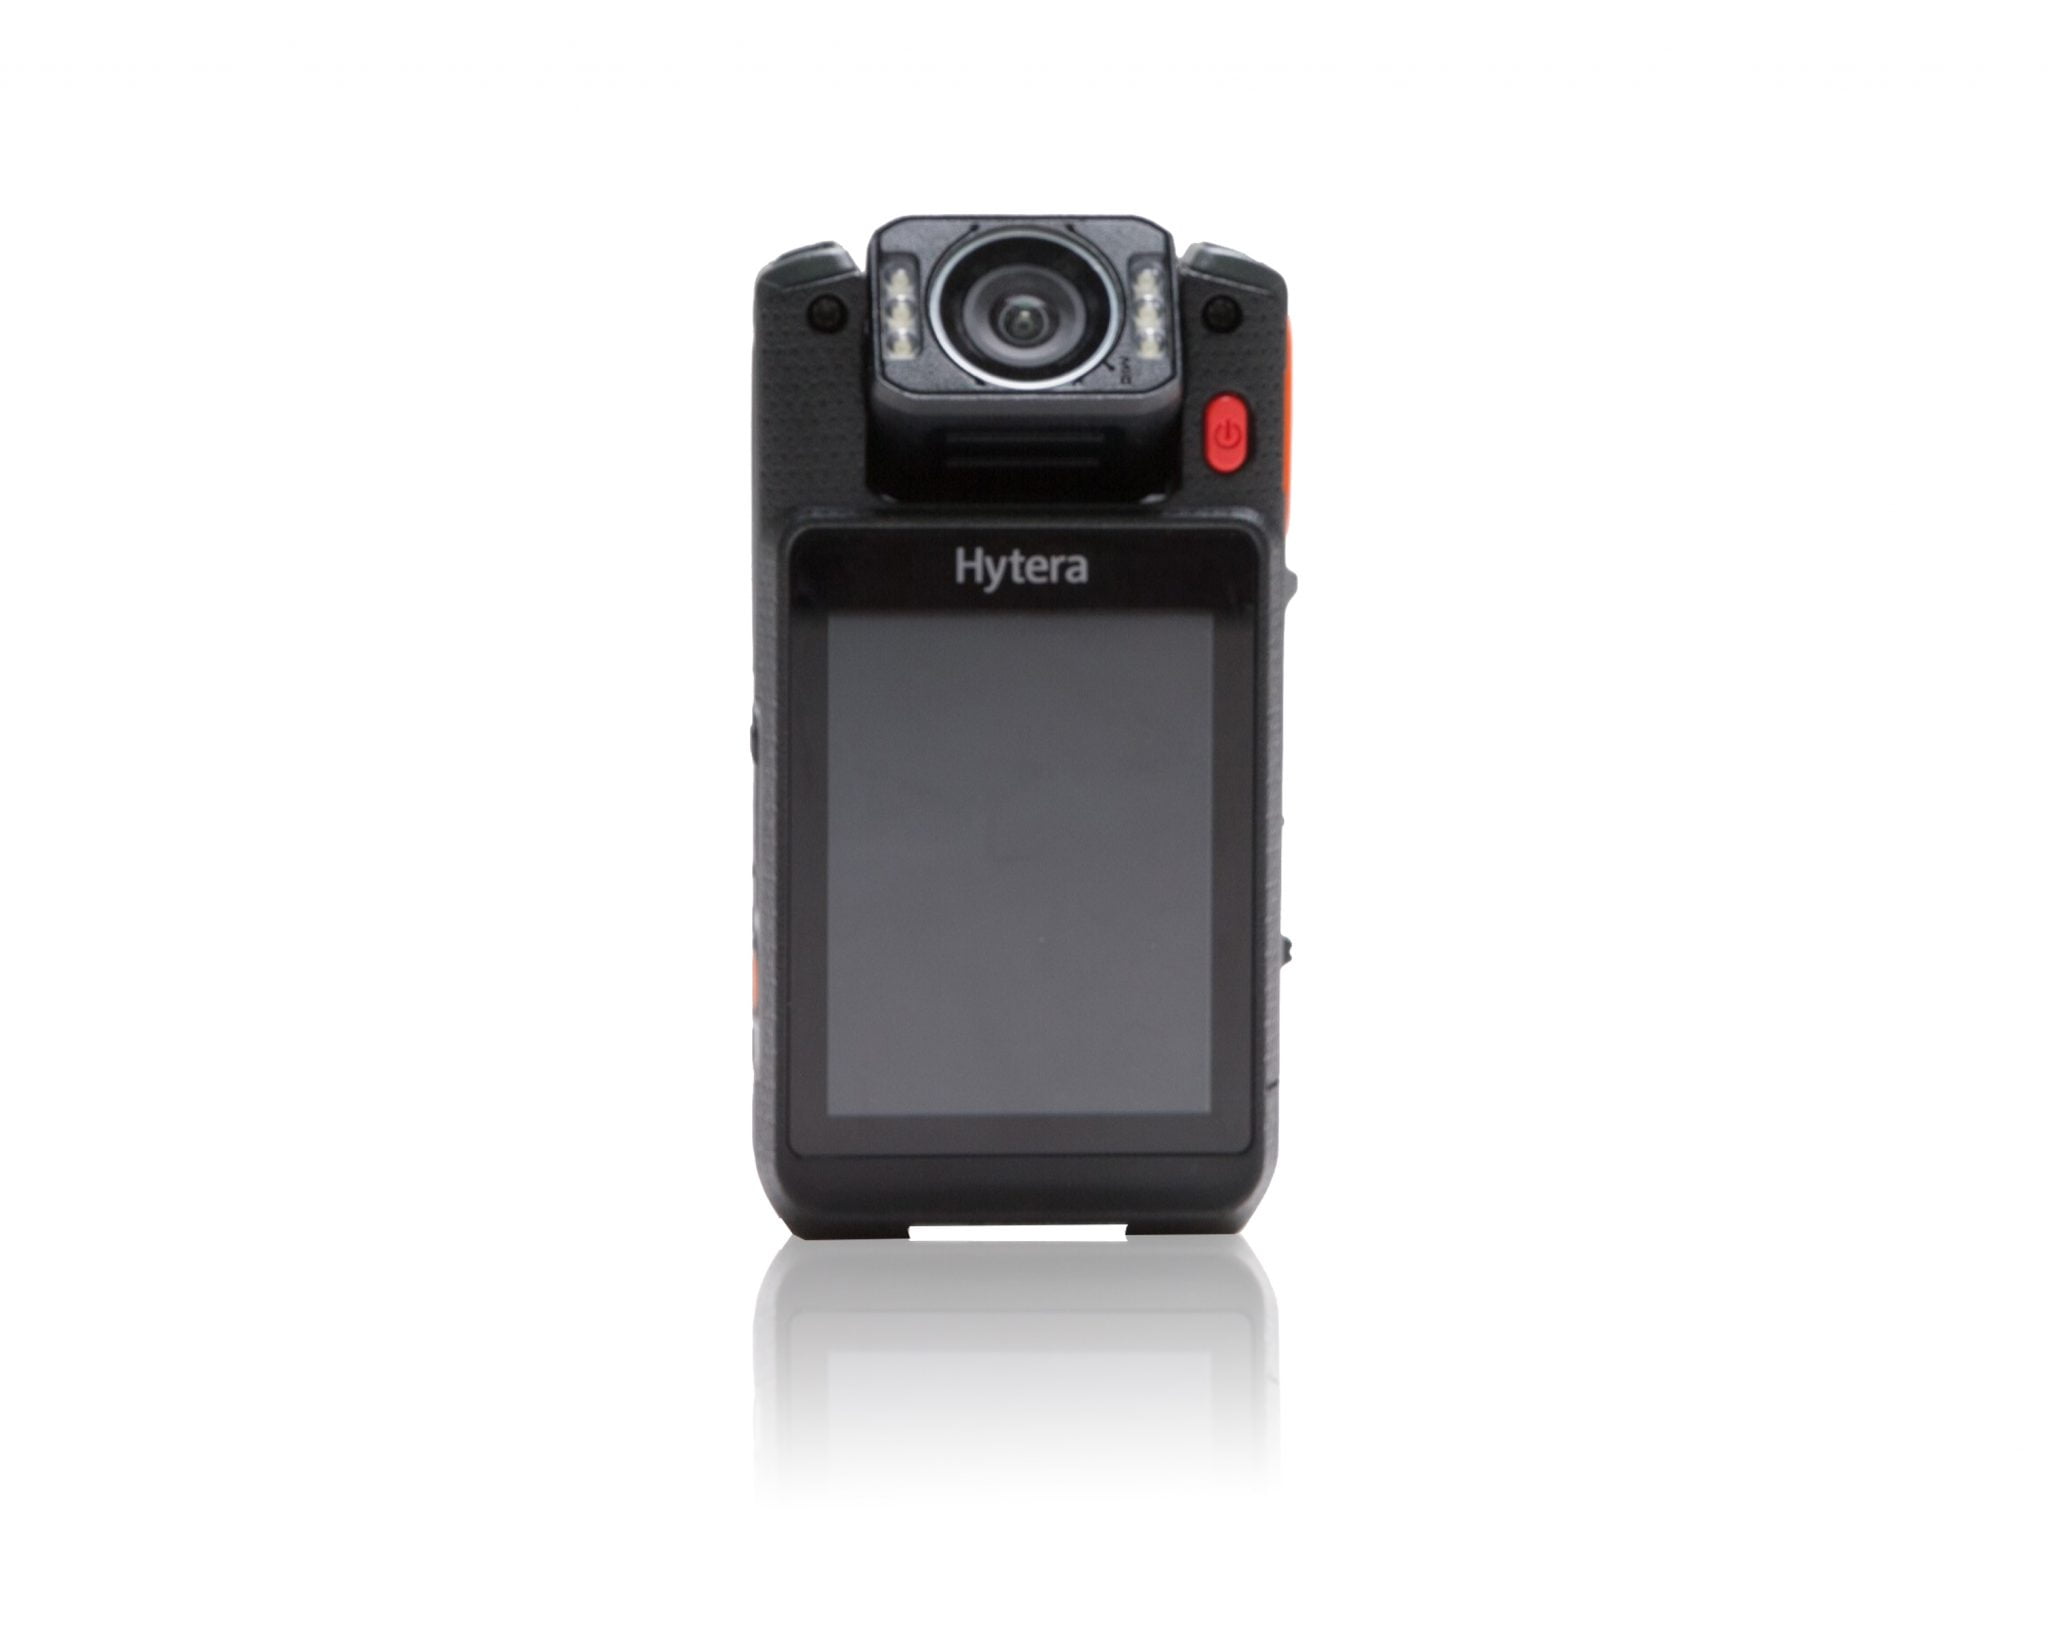 Hytera VM780 Bodycam UK From Brentwood Communications